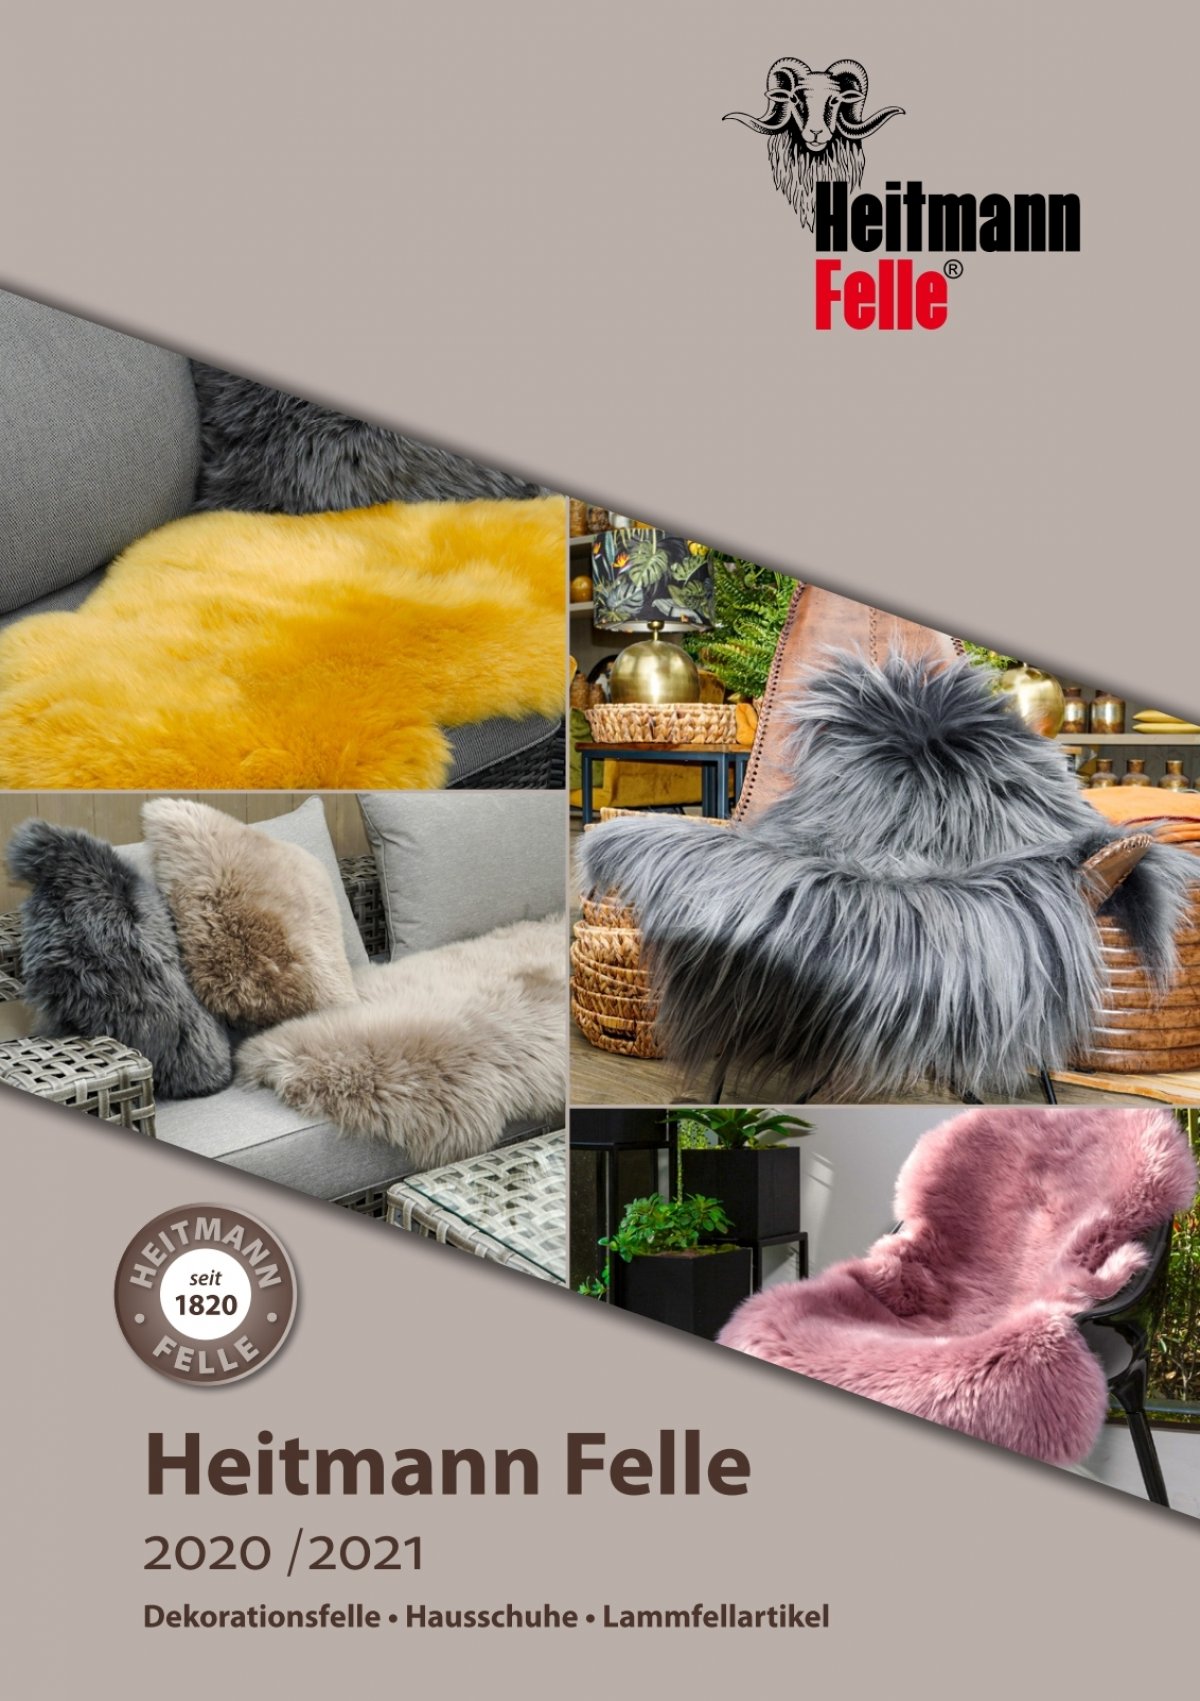 Heitmann Lammfellartikel - - Felle Katalog und andere GmbH Dekorationsfelle, Hausschuhe 2020/21